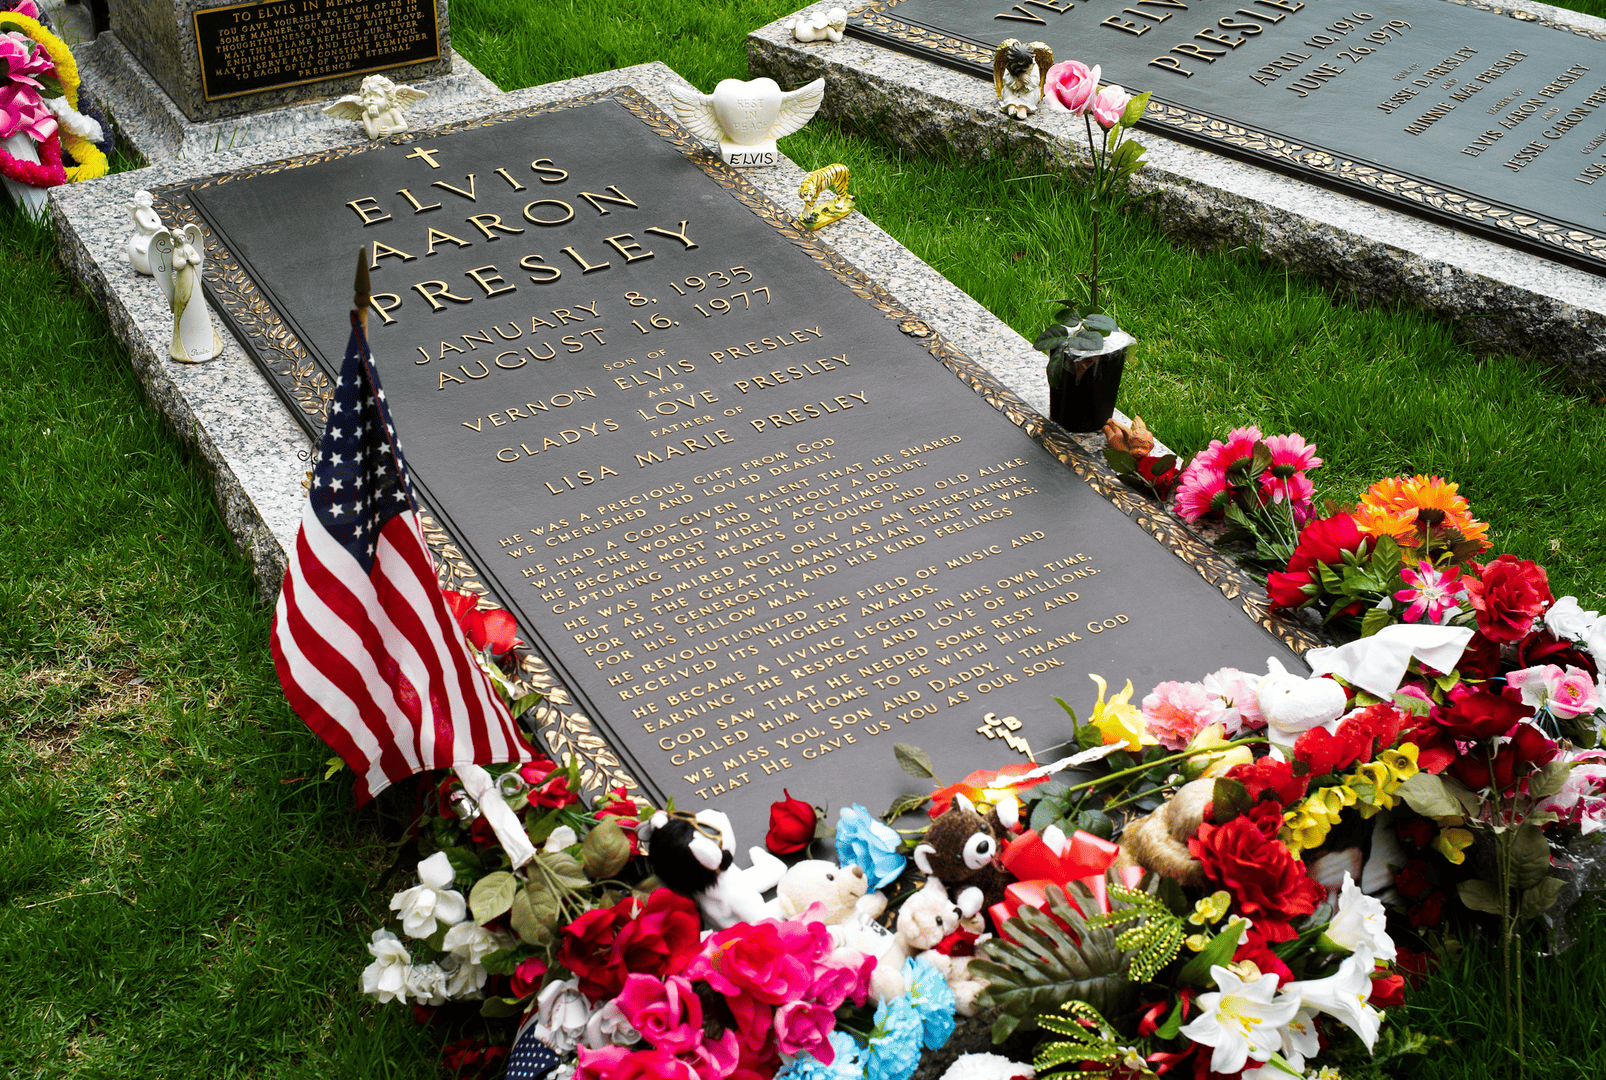 The grave of Elvis Presley.